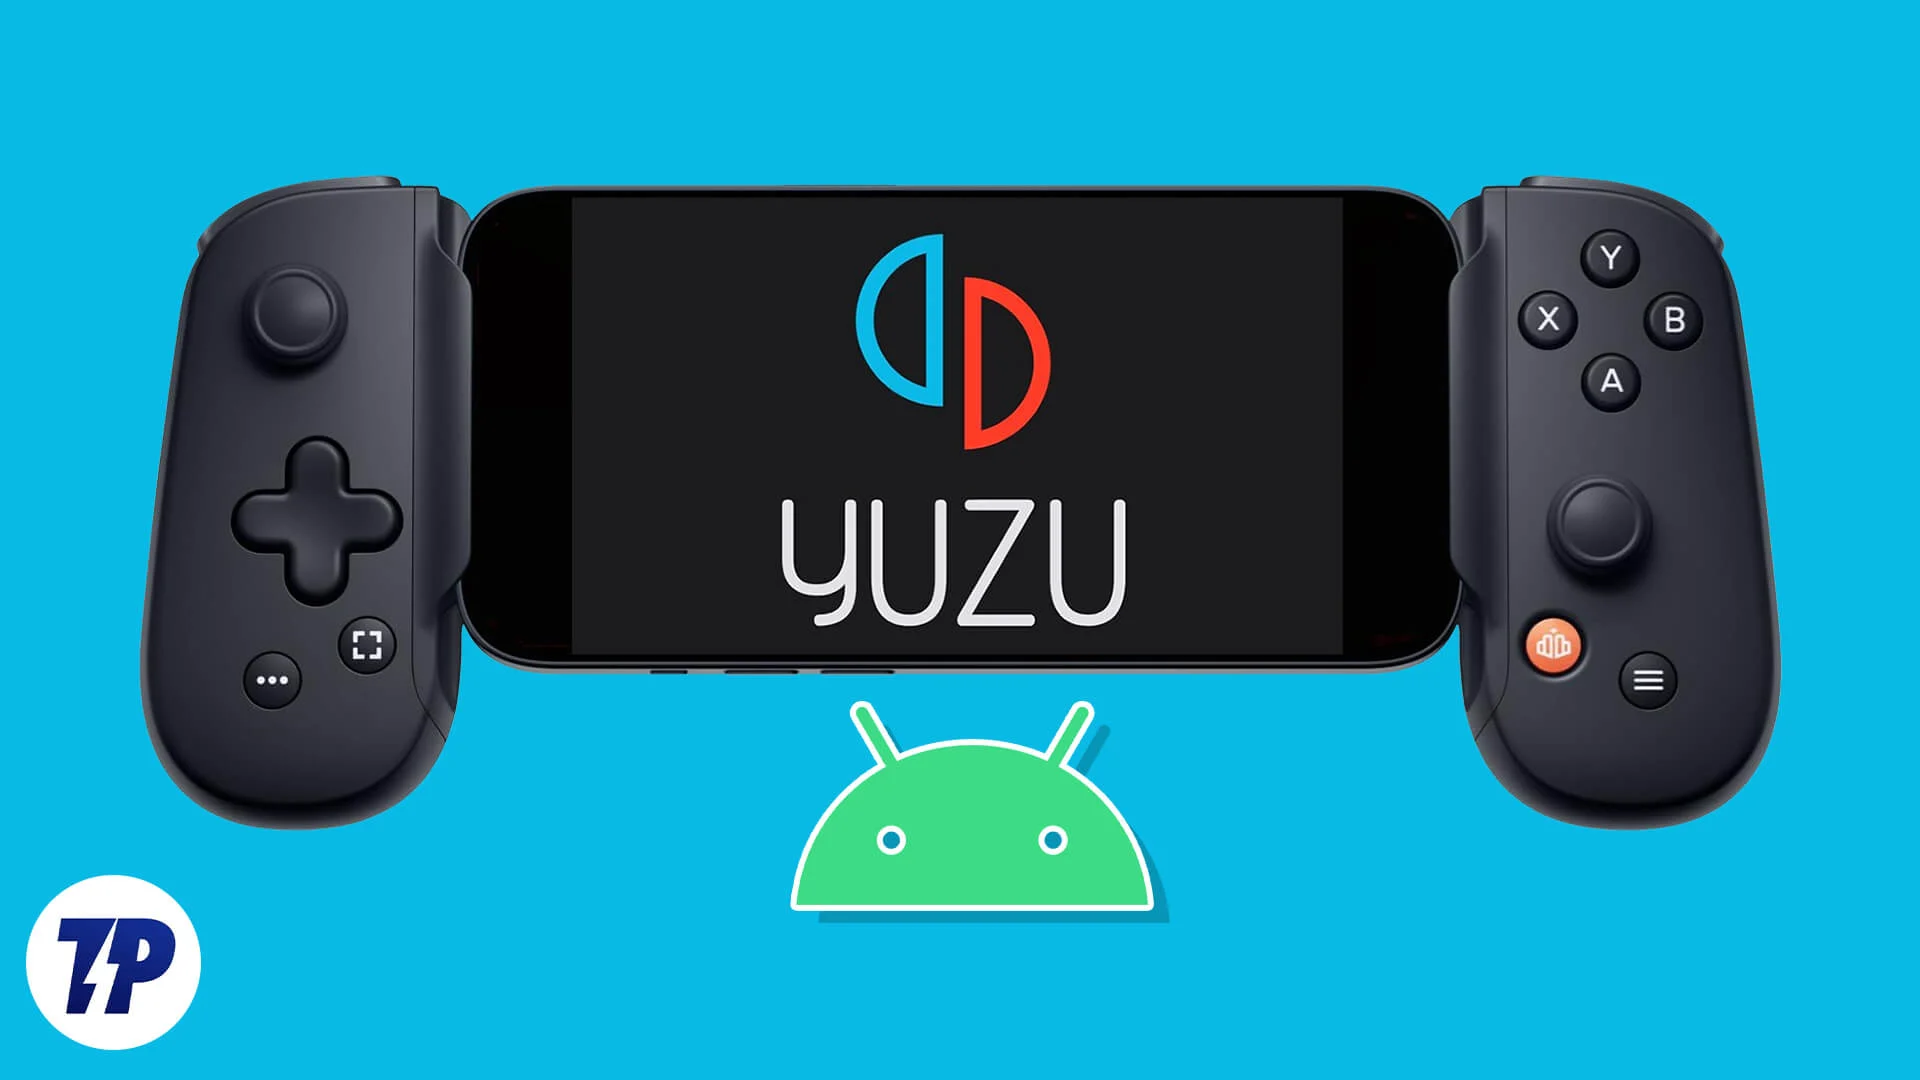 yuzu nintendo switch emulator for android